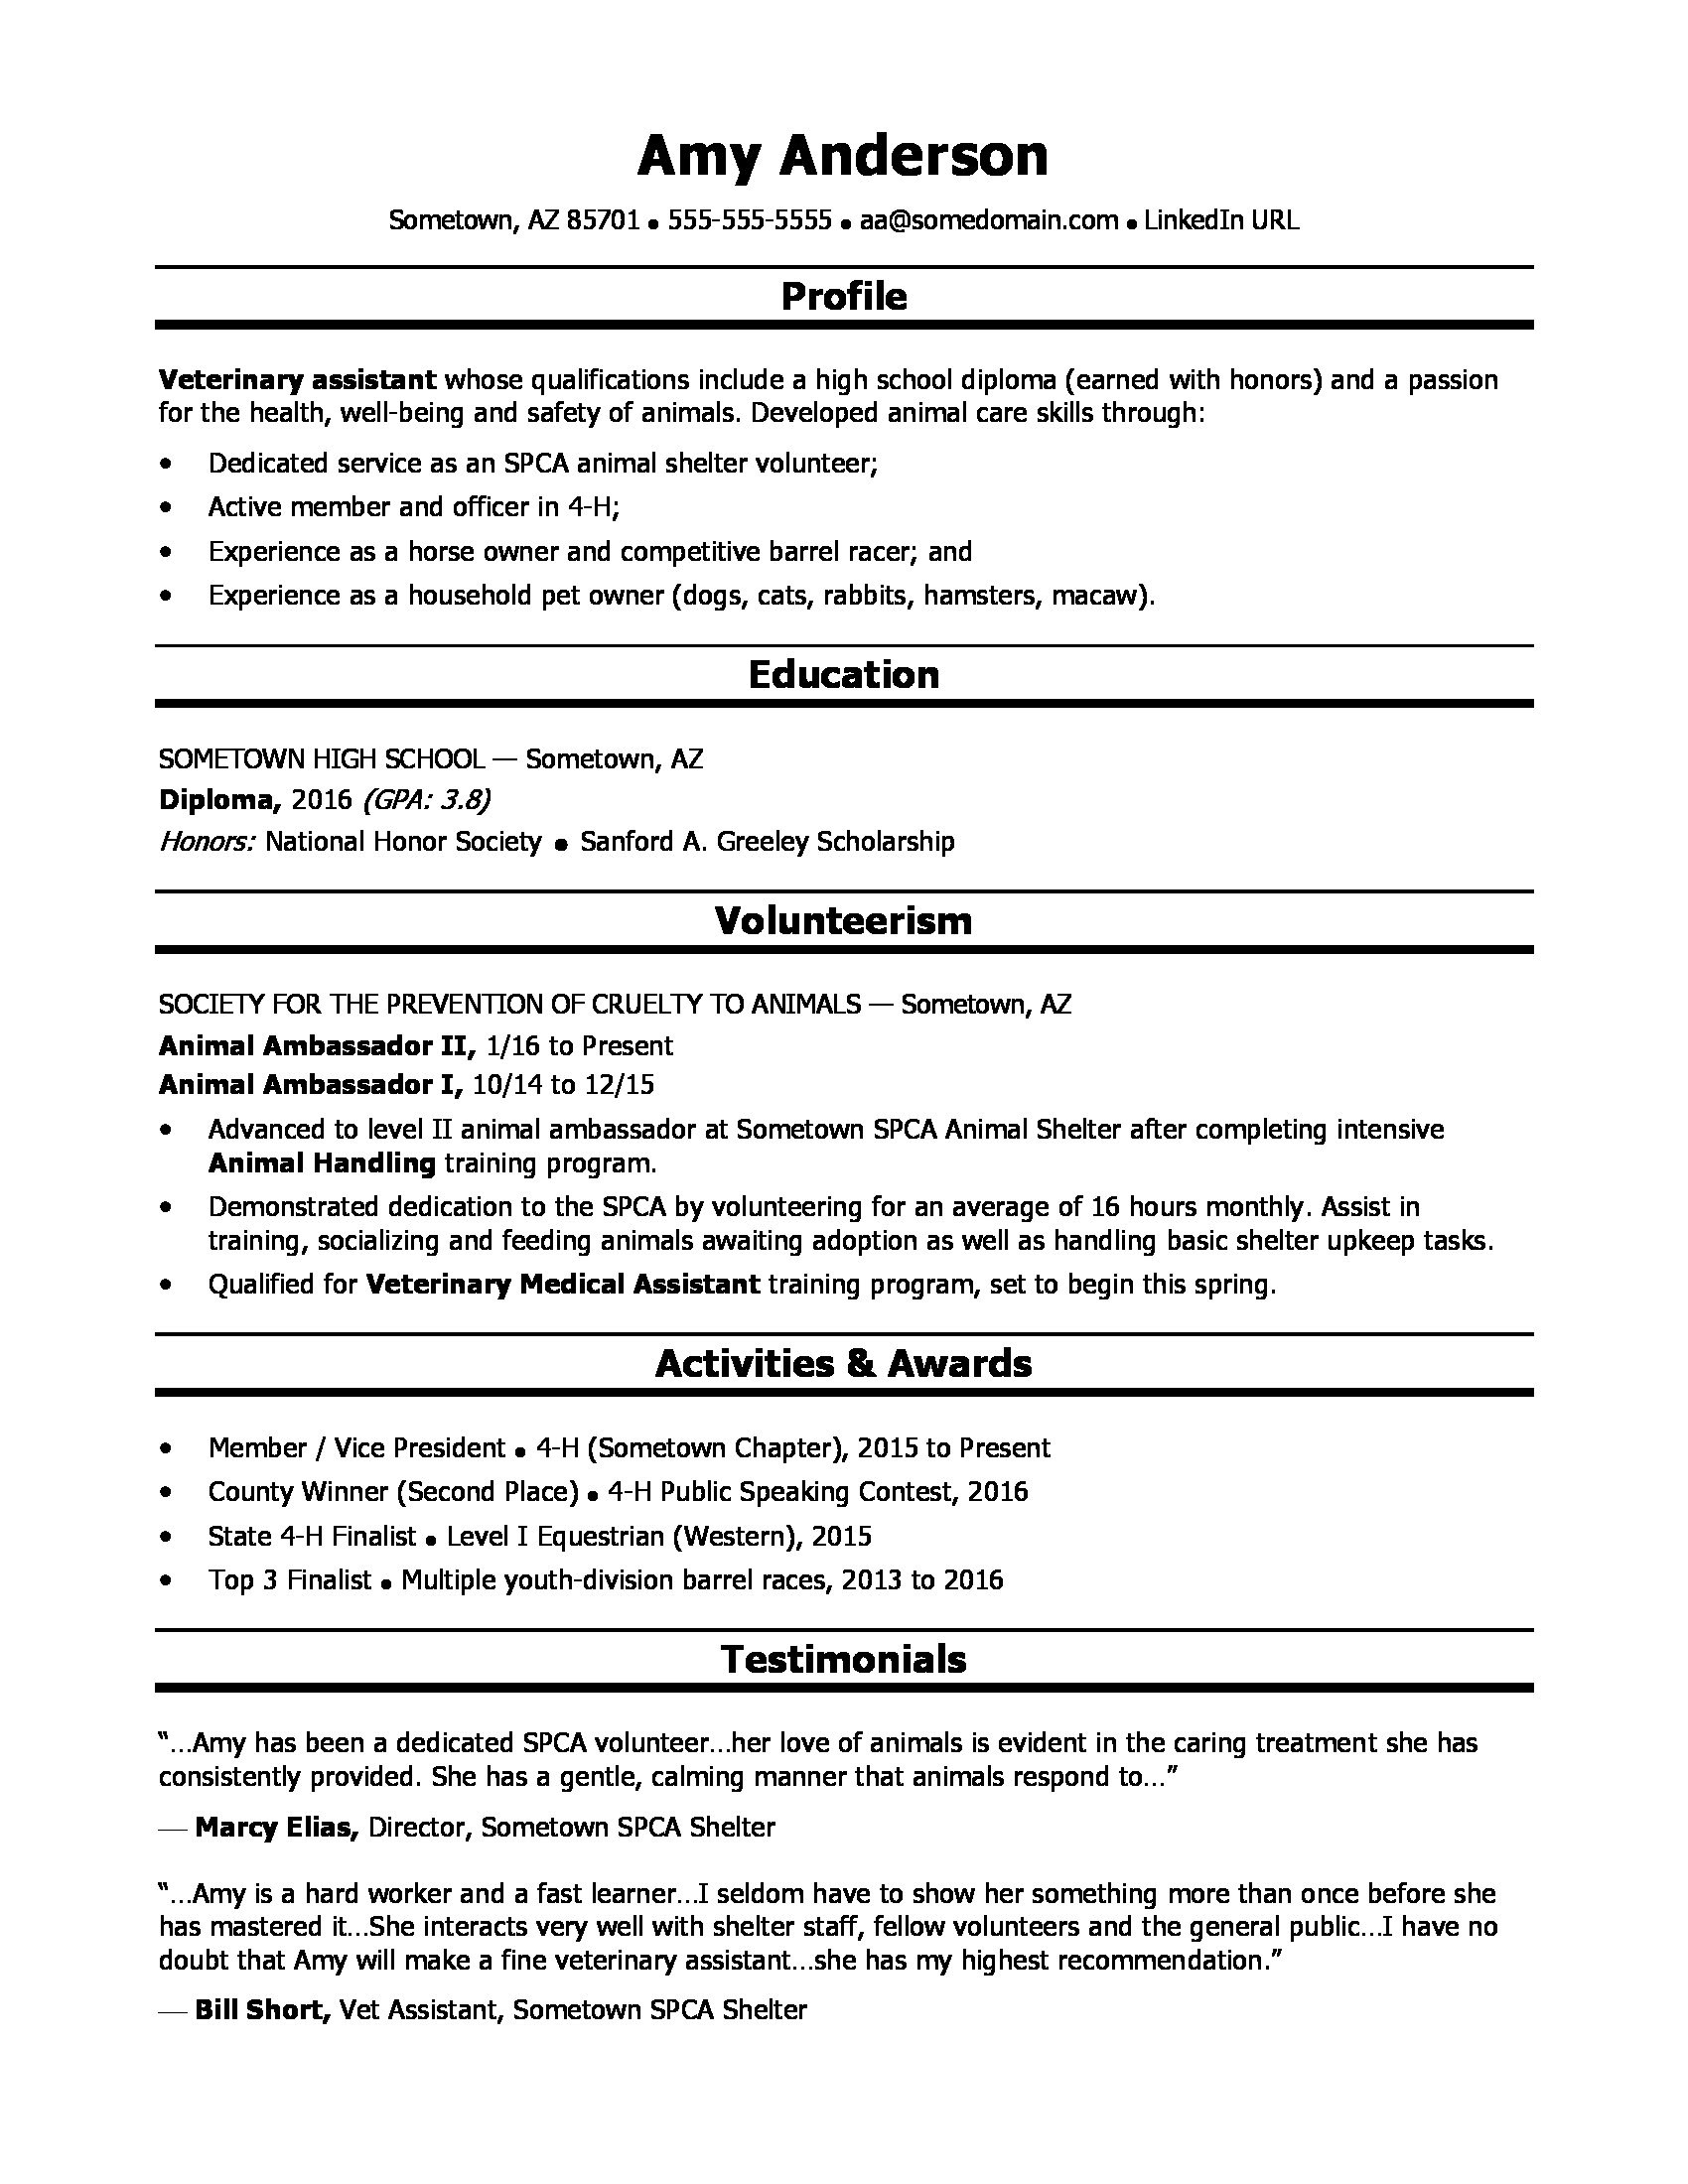 Sample Resume Did Not Complete College High School Grad Resume Sample Monster.com